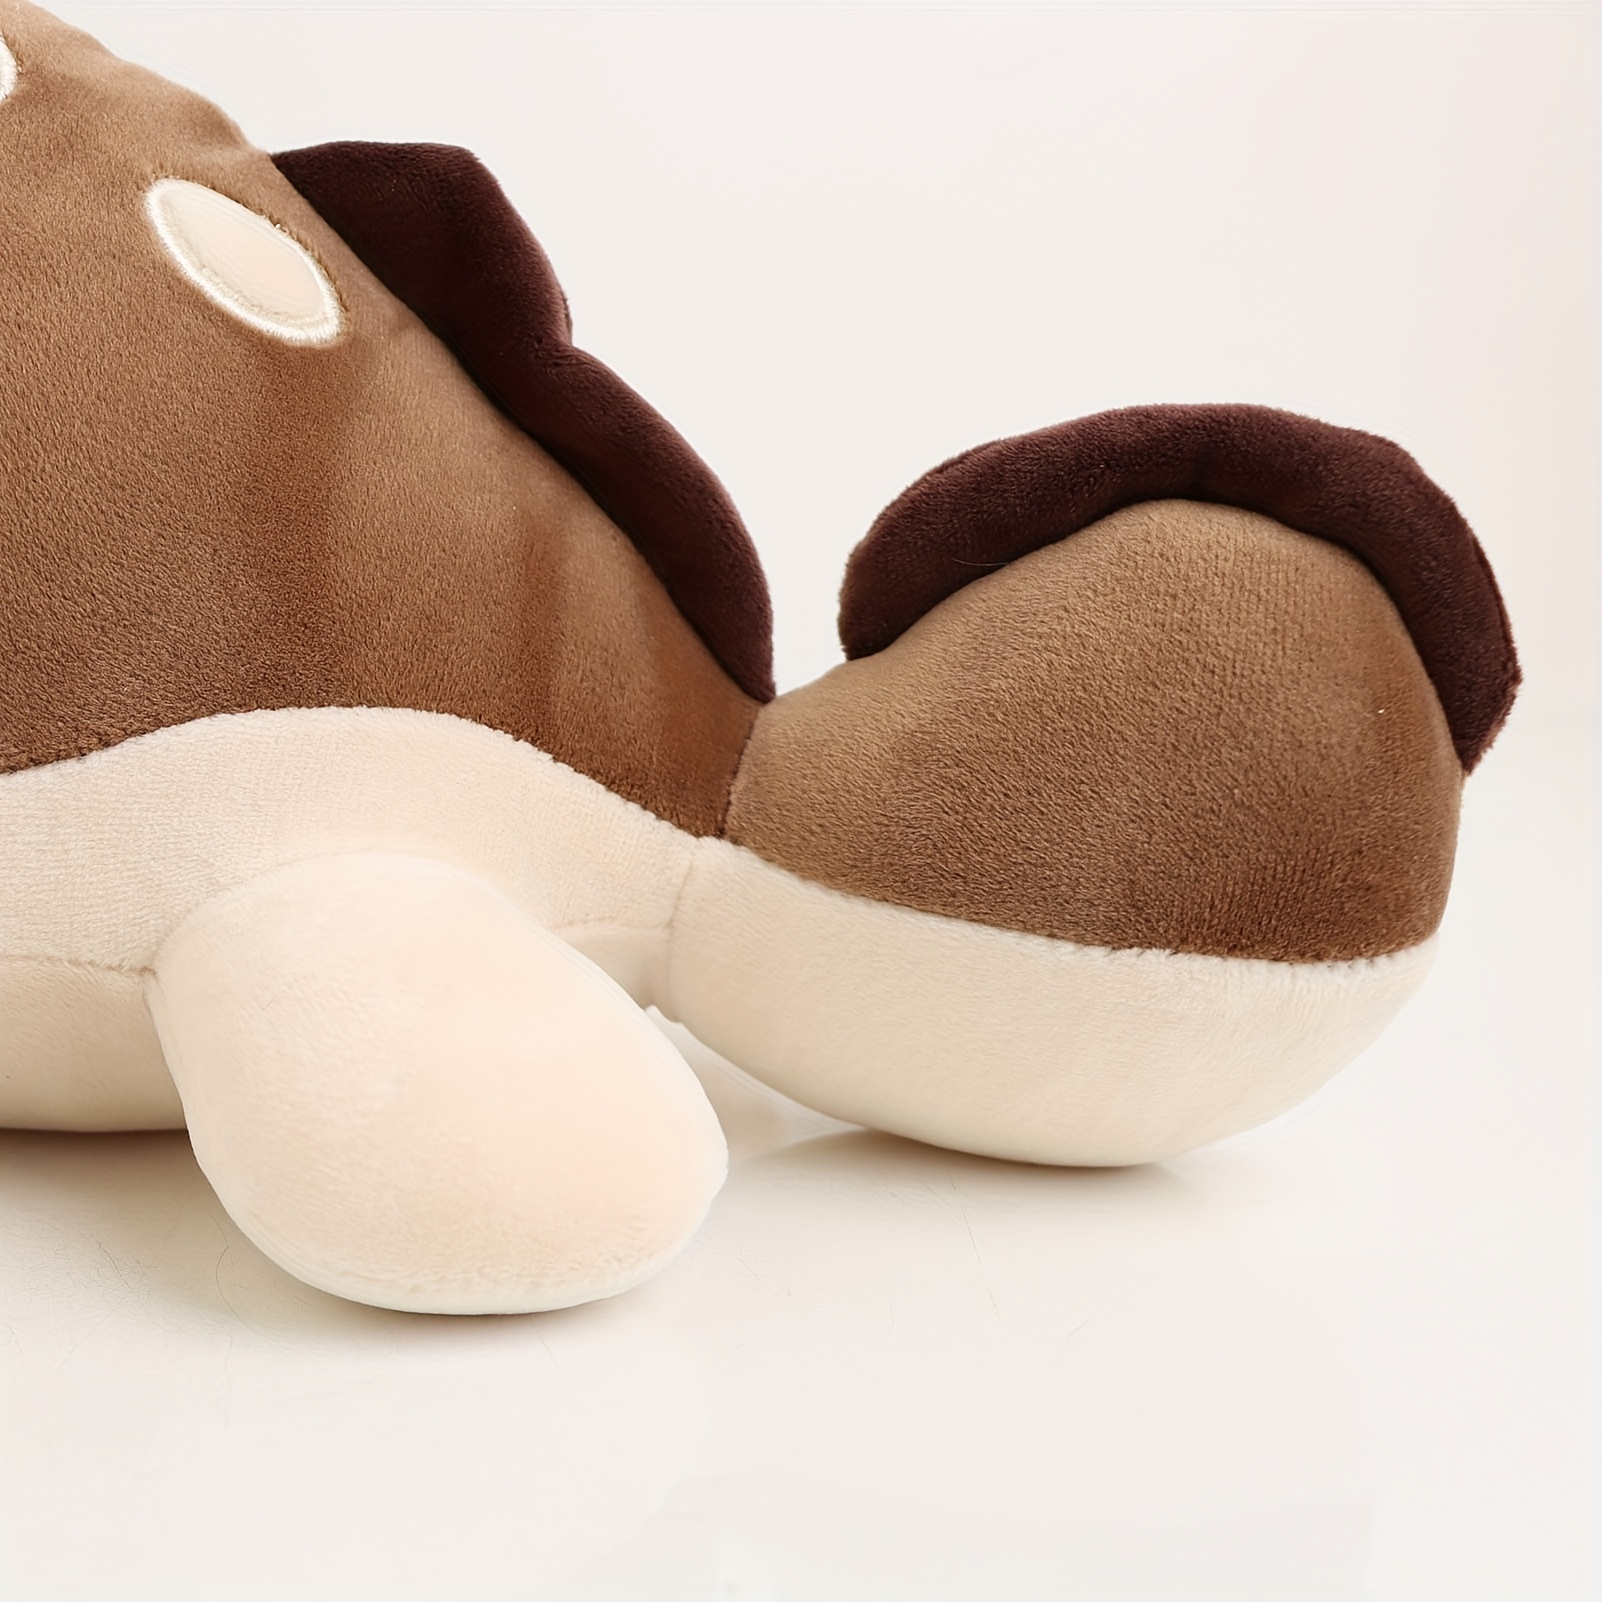 Cute Plush Toys & Stuffed Animals Plushies Collection – Kawaii